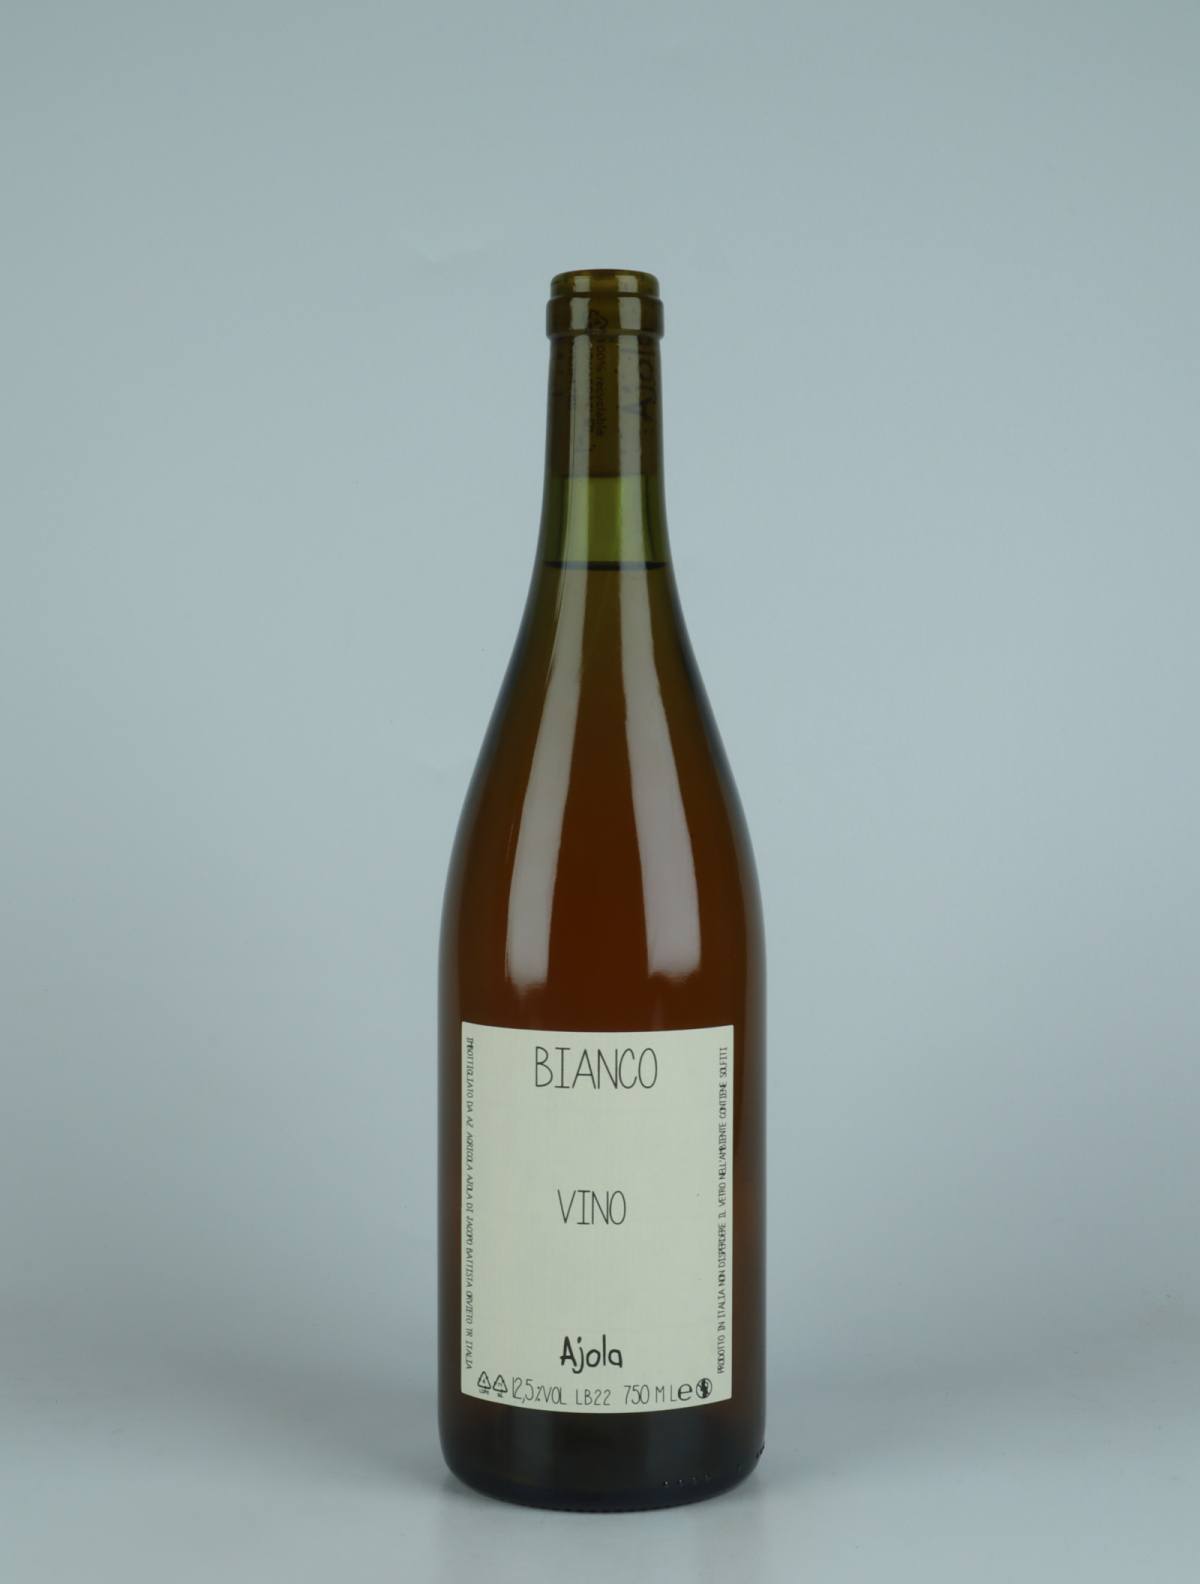 A bottle 2022 Vino Bianco Orange wine from Ajola, Umbria in Italy